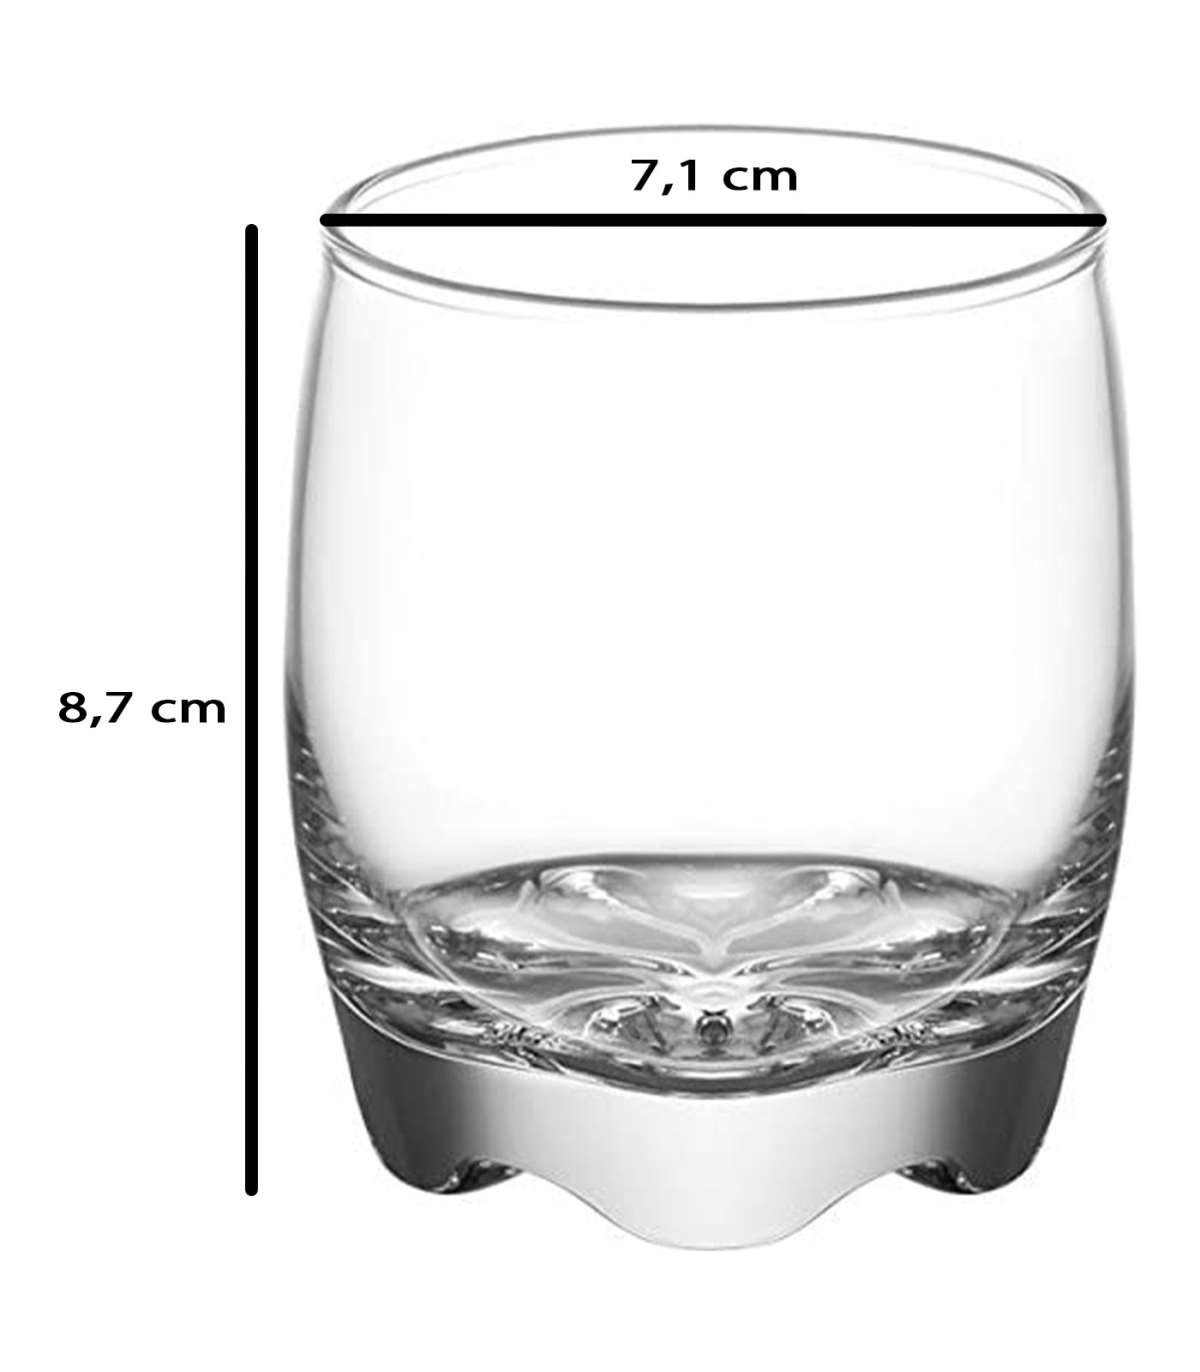 https://tradineur.com/69364-superlarge_default/tradineur--set-de-6-vasos-de-cristal-adora-base-gruesa-resistentes-aptos-para-lavavajillas-servir-agua-whisky-87-x-71-cm-290-ml.jpg